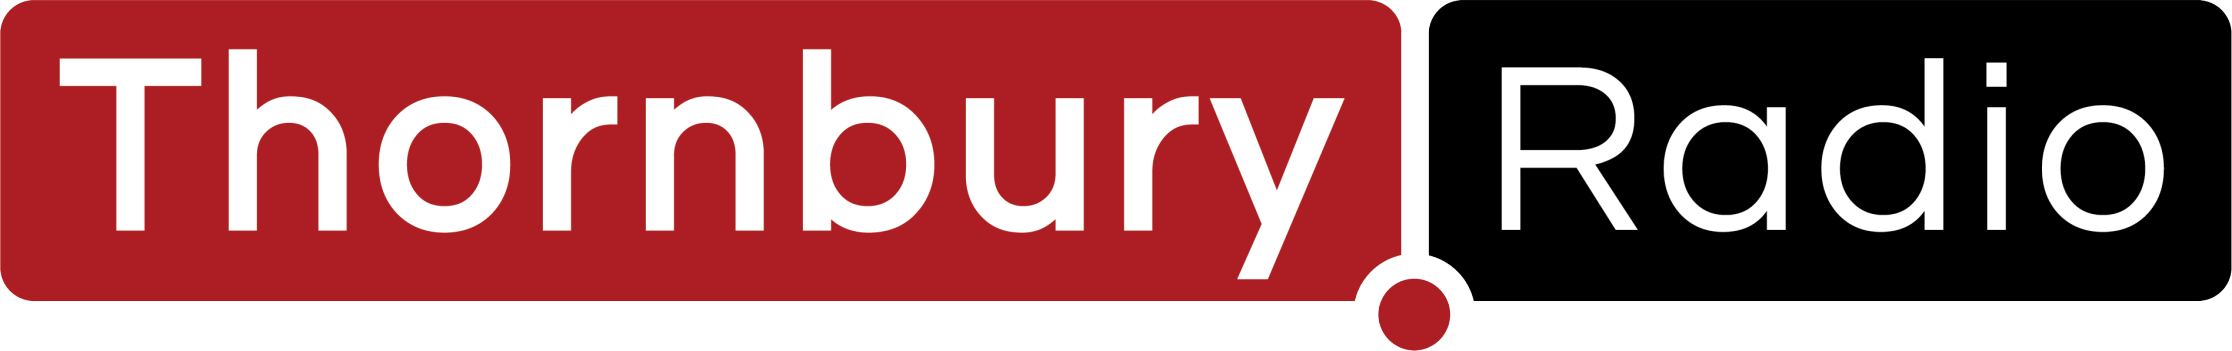 thornbury logo